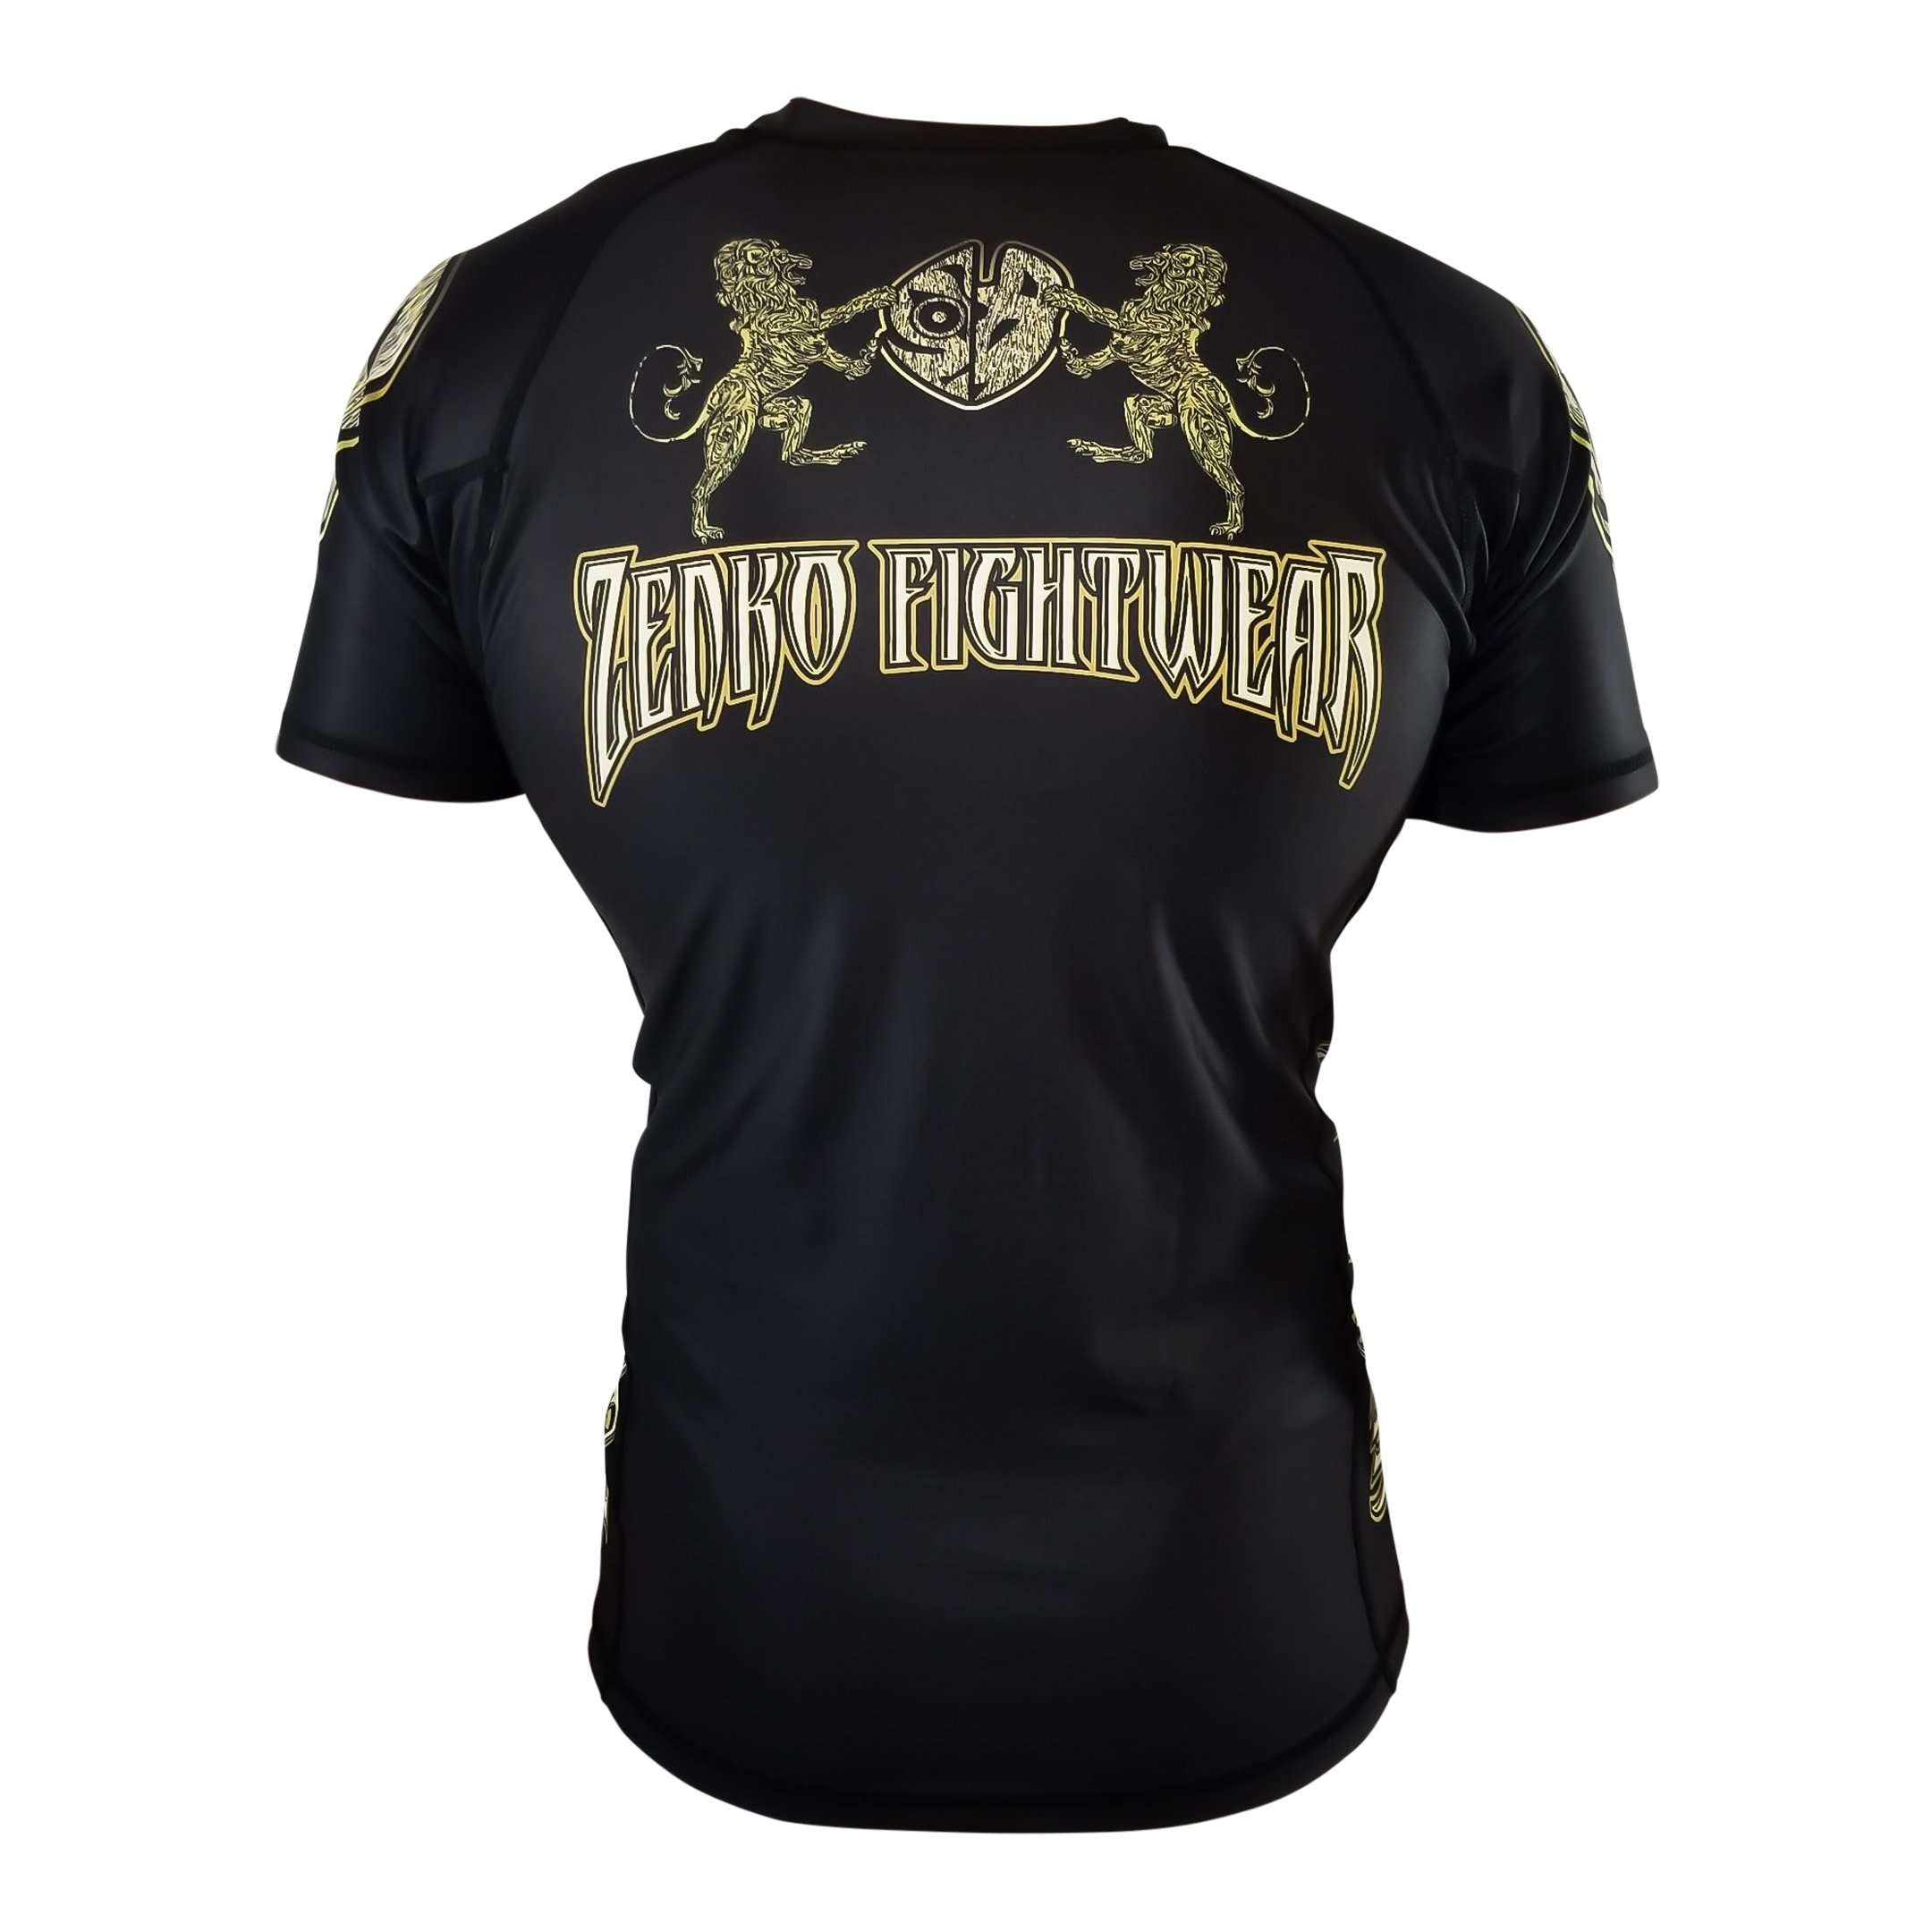 Zenko Fightwear Royal Guard Rashguard Gold Lion Back